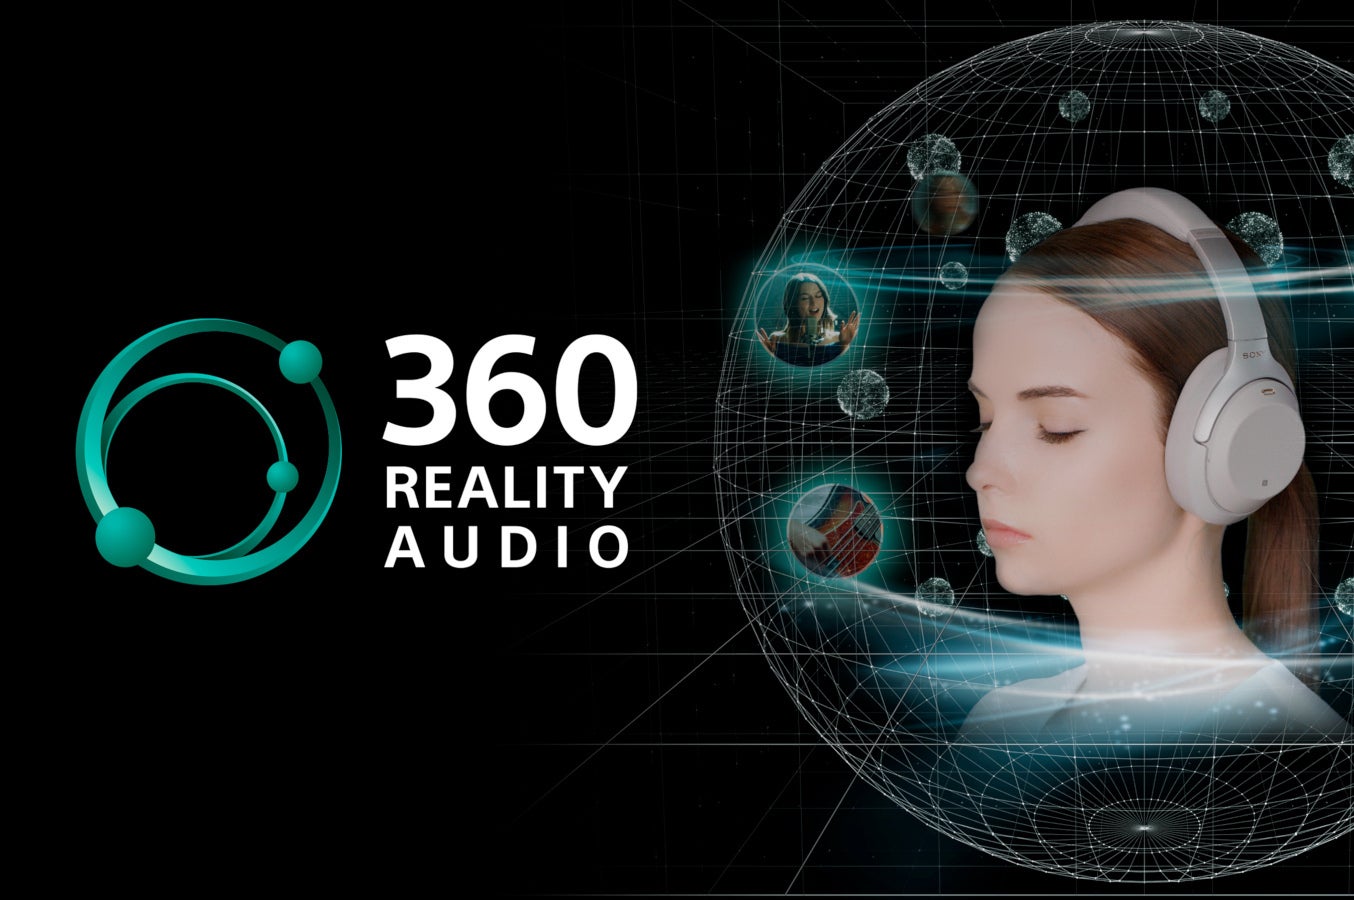 Apple’s Spatial Audio already has a major advantage over Sony’s 360 Reality